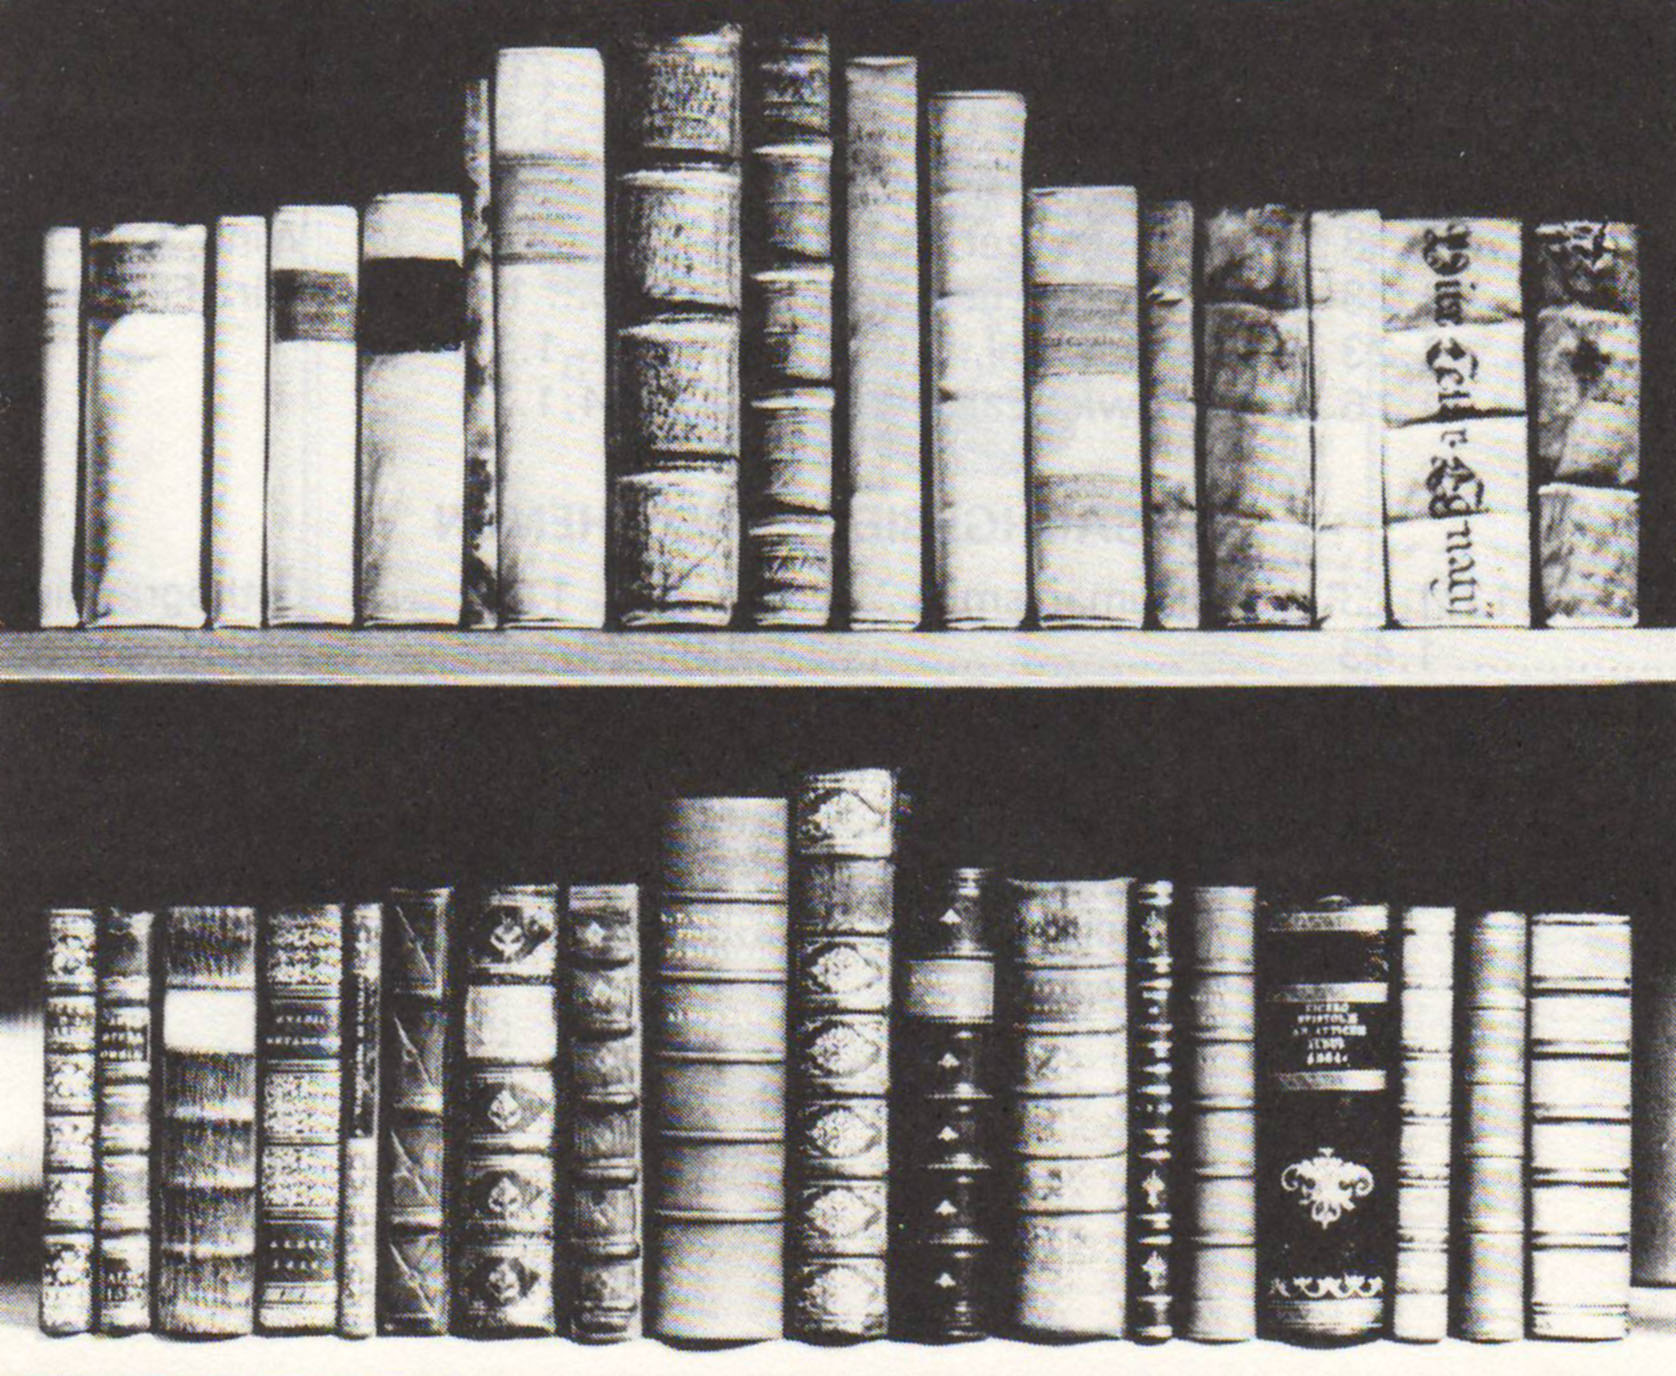 Katalog sieben: Bibliotheca Aldina